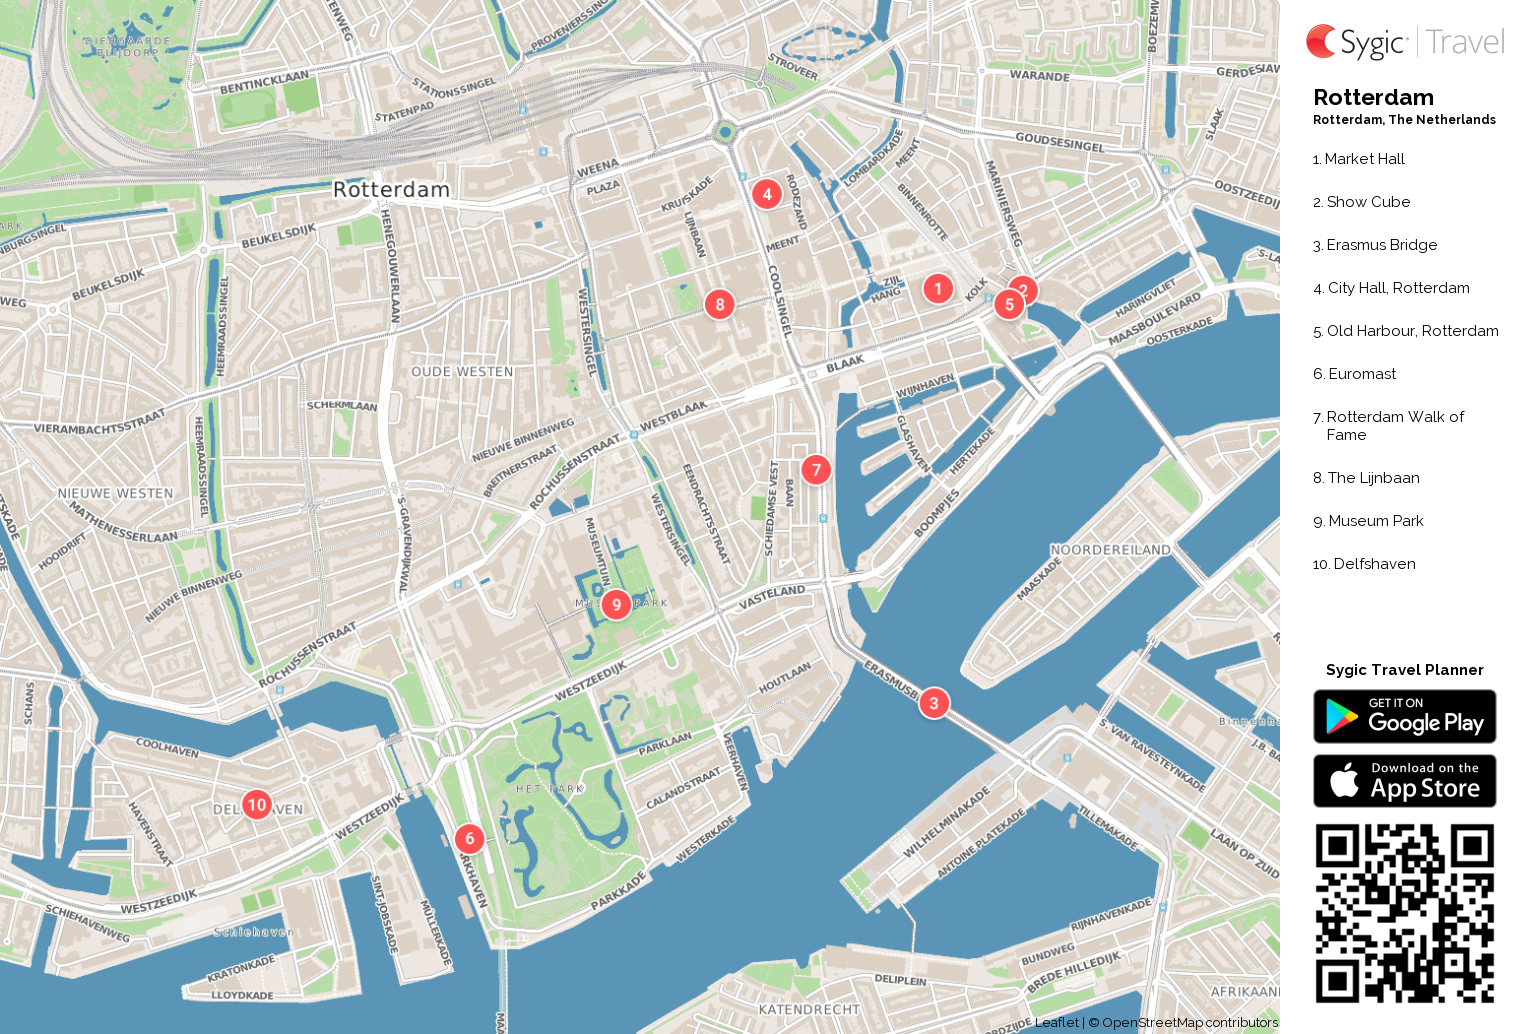 map of rotterdam city centre Rotterdam Printable Tourist Map Sygic Travel map of rotterdam city centre